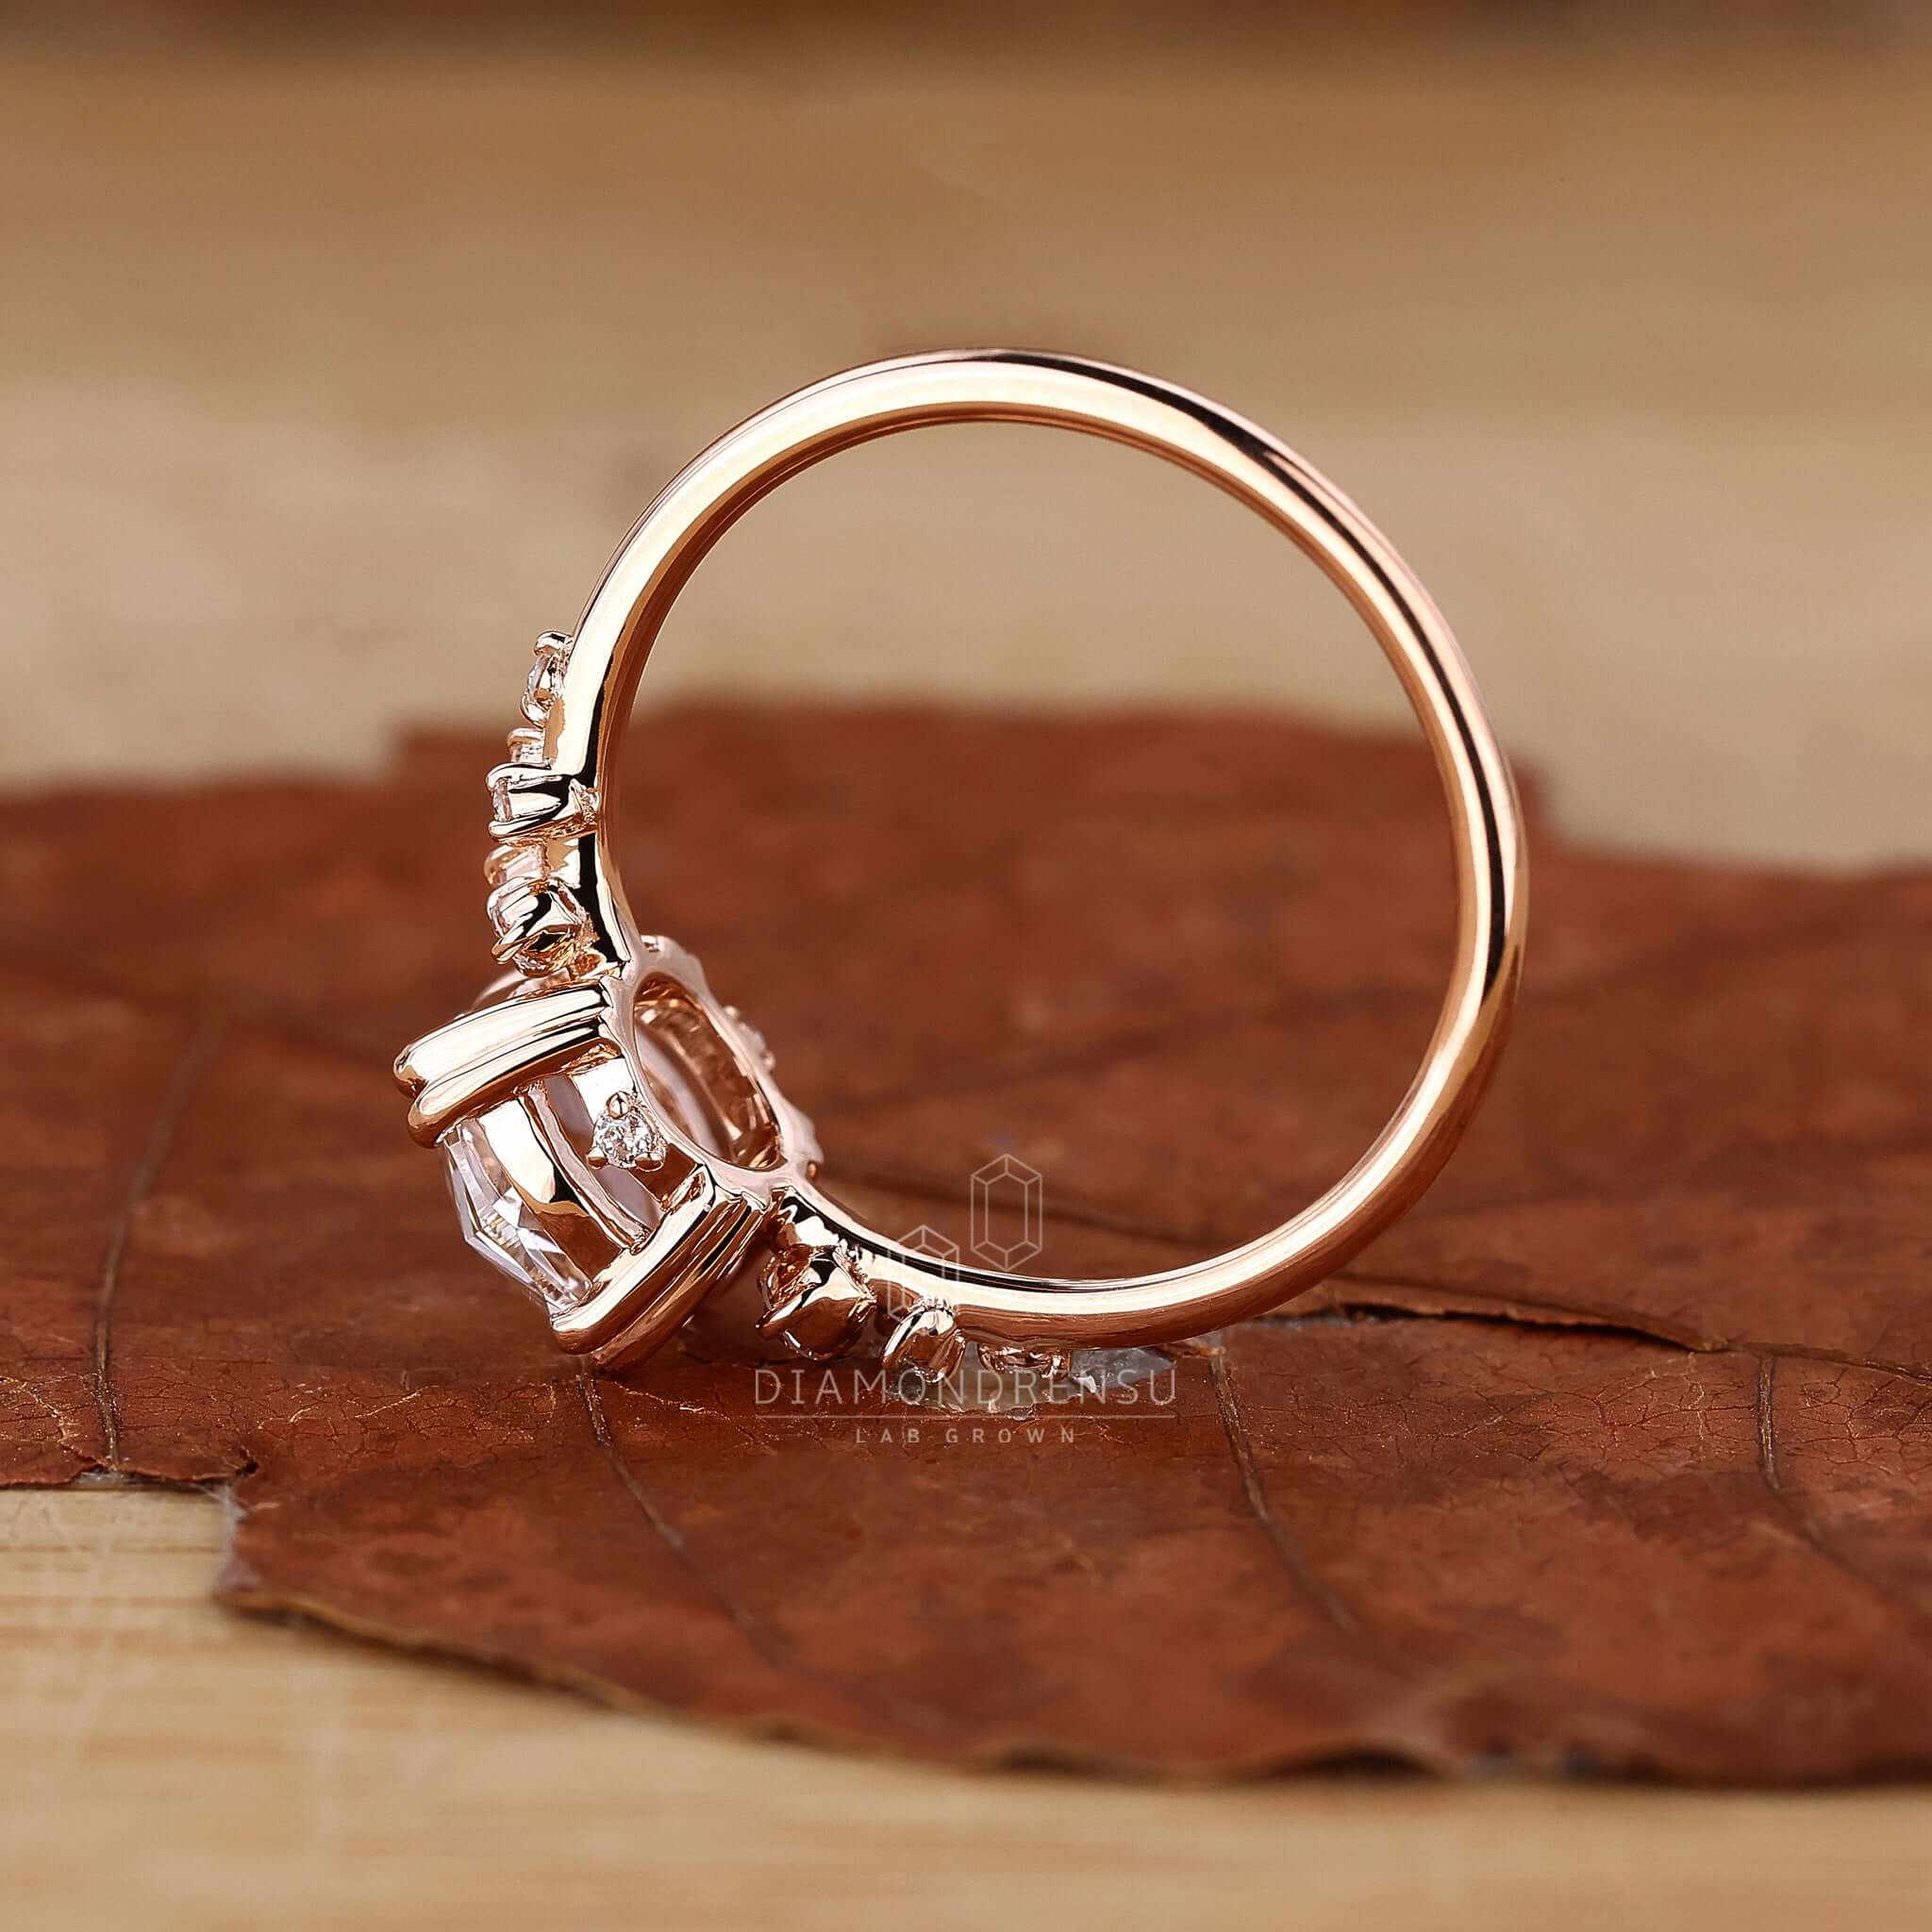 Sophisticated vintage rose gold engagement ring set against a soft, romantic backdrop